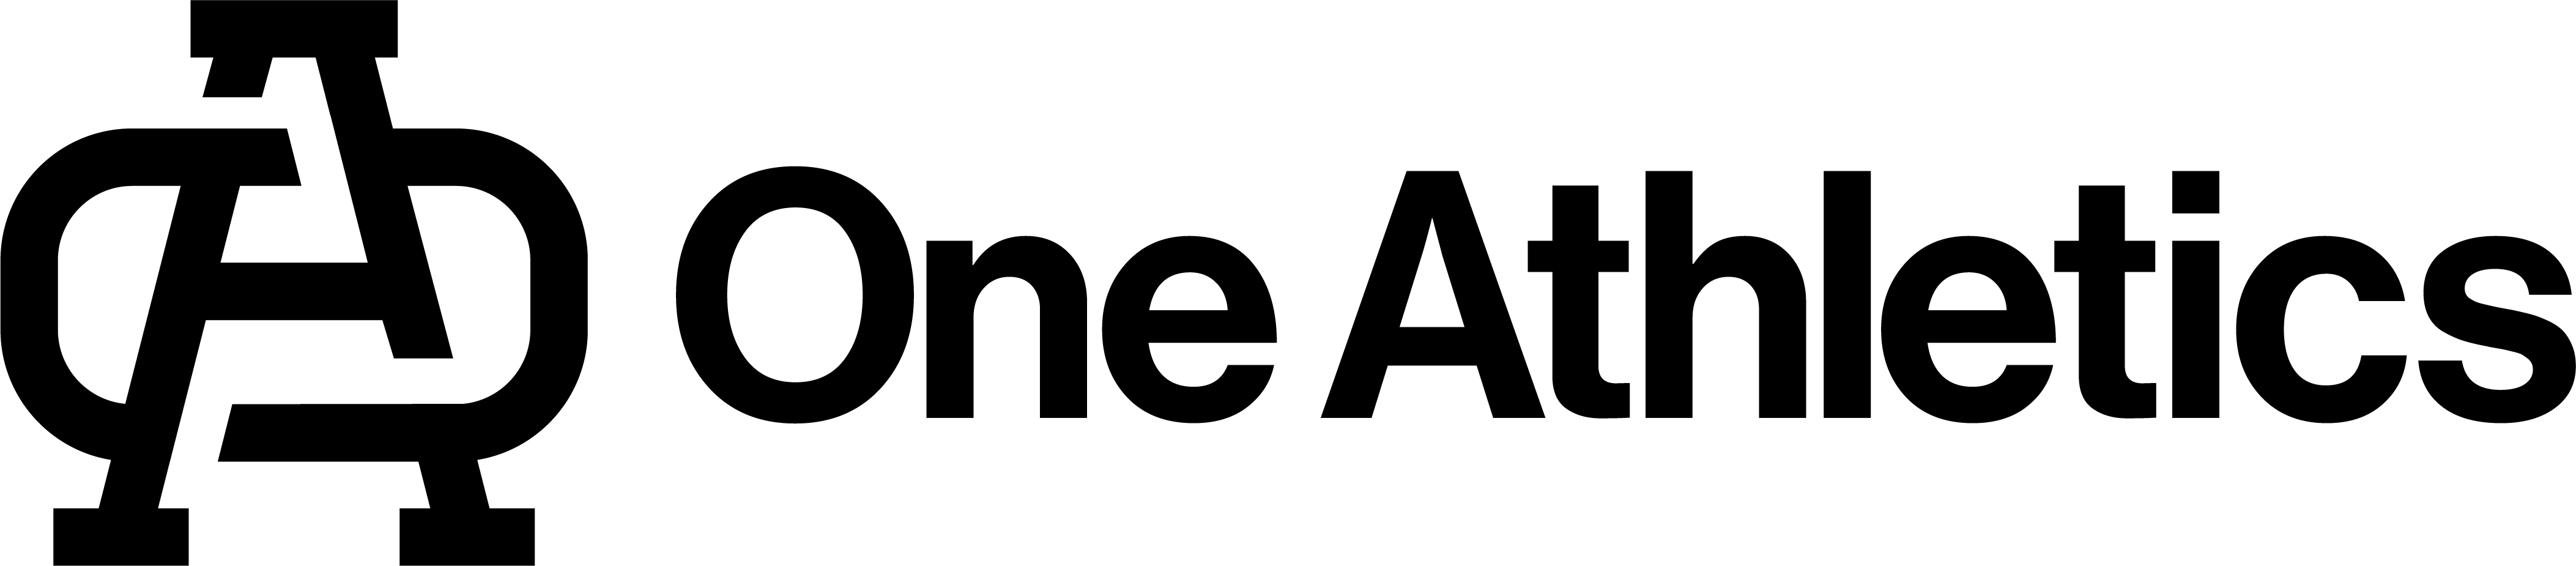 One Athletics logo dark